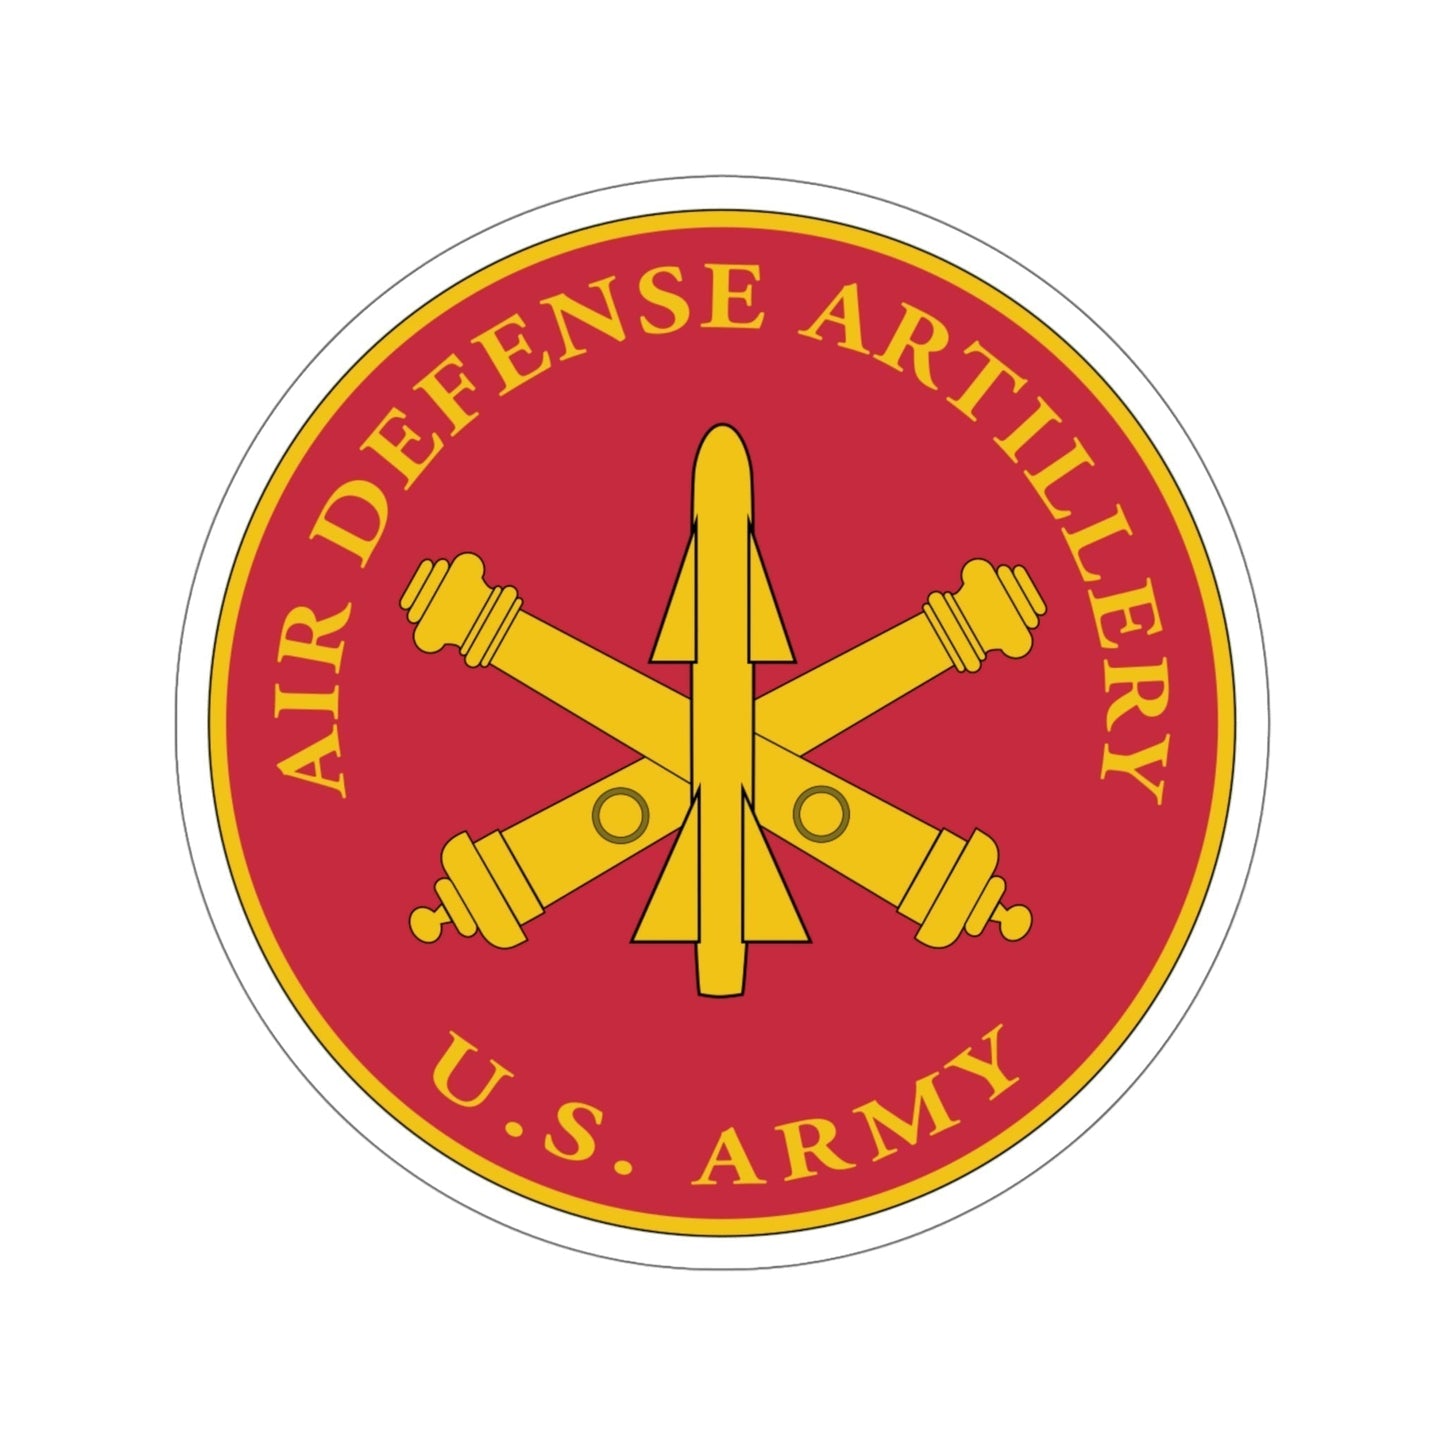 Air Defense Artillery Branch (U.S. Army) STICKER Vinyl Die-Cut Decal-6 Inch-The Sticker Space